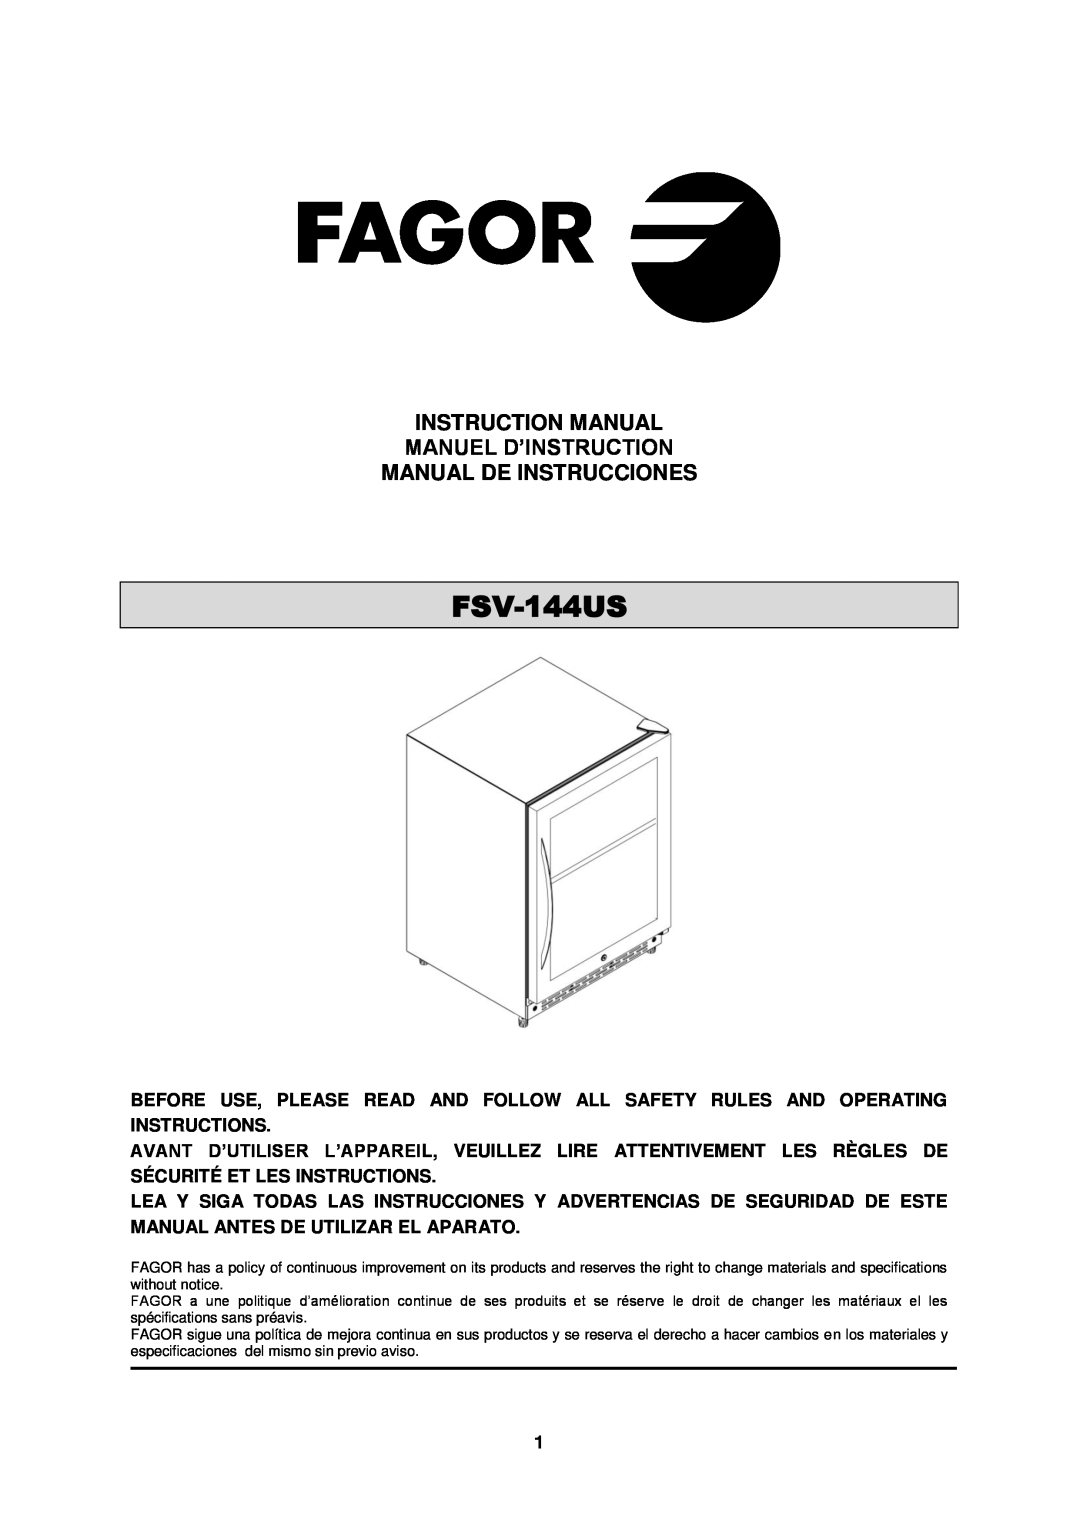 Fagor America FSV-144US instruction manual Instruction Manual Manuel D’Instruction, Manual De Instrucciones 